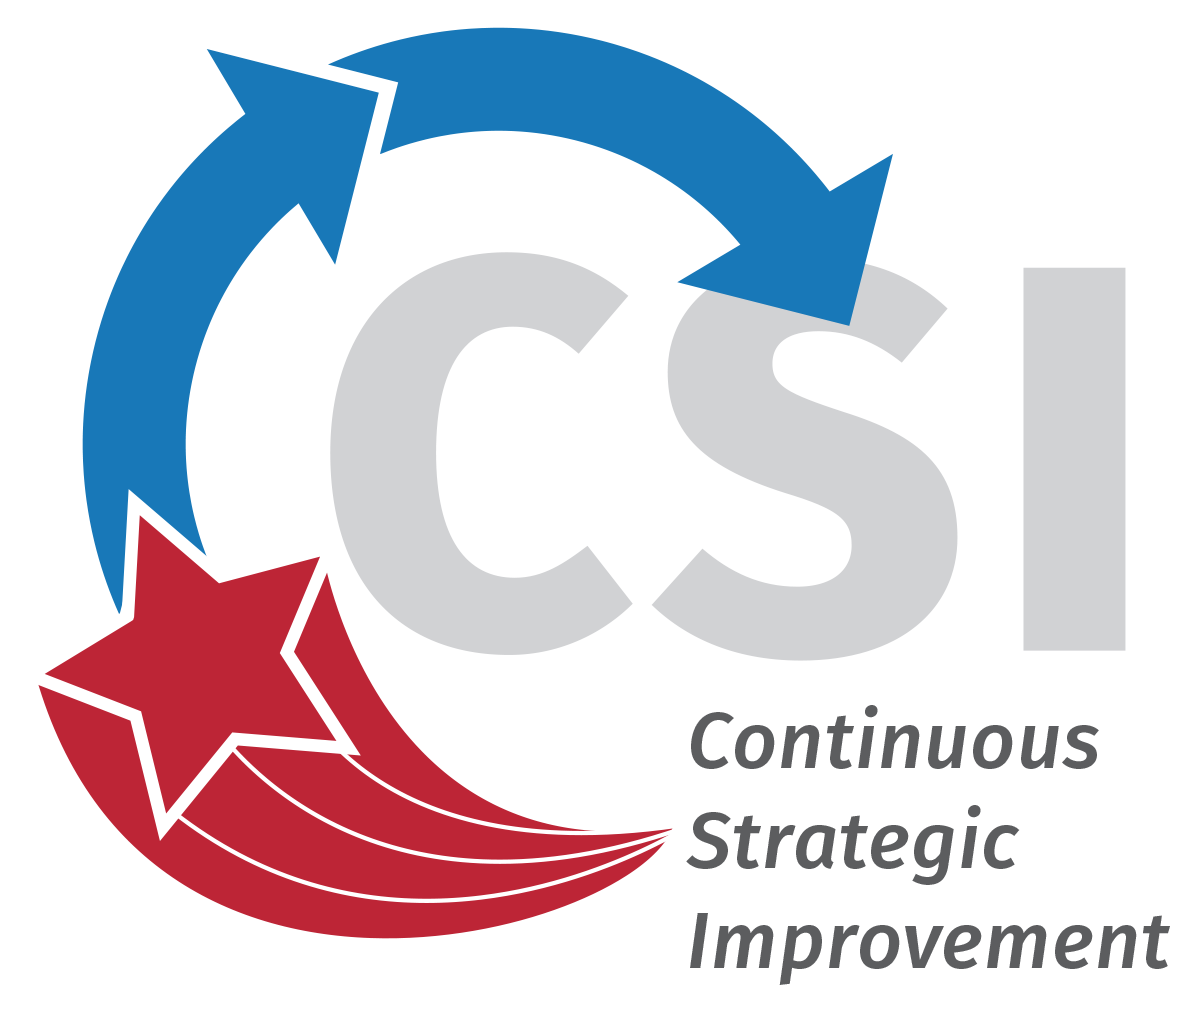 CSC logo png download - Png Lab